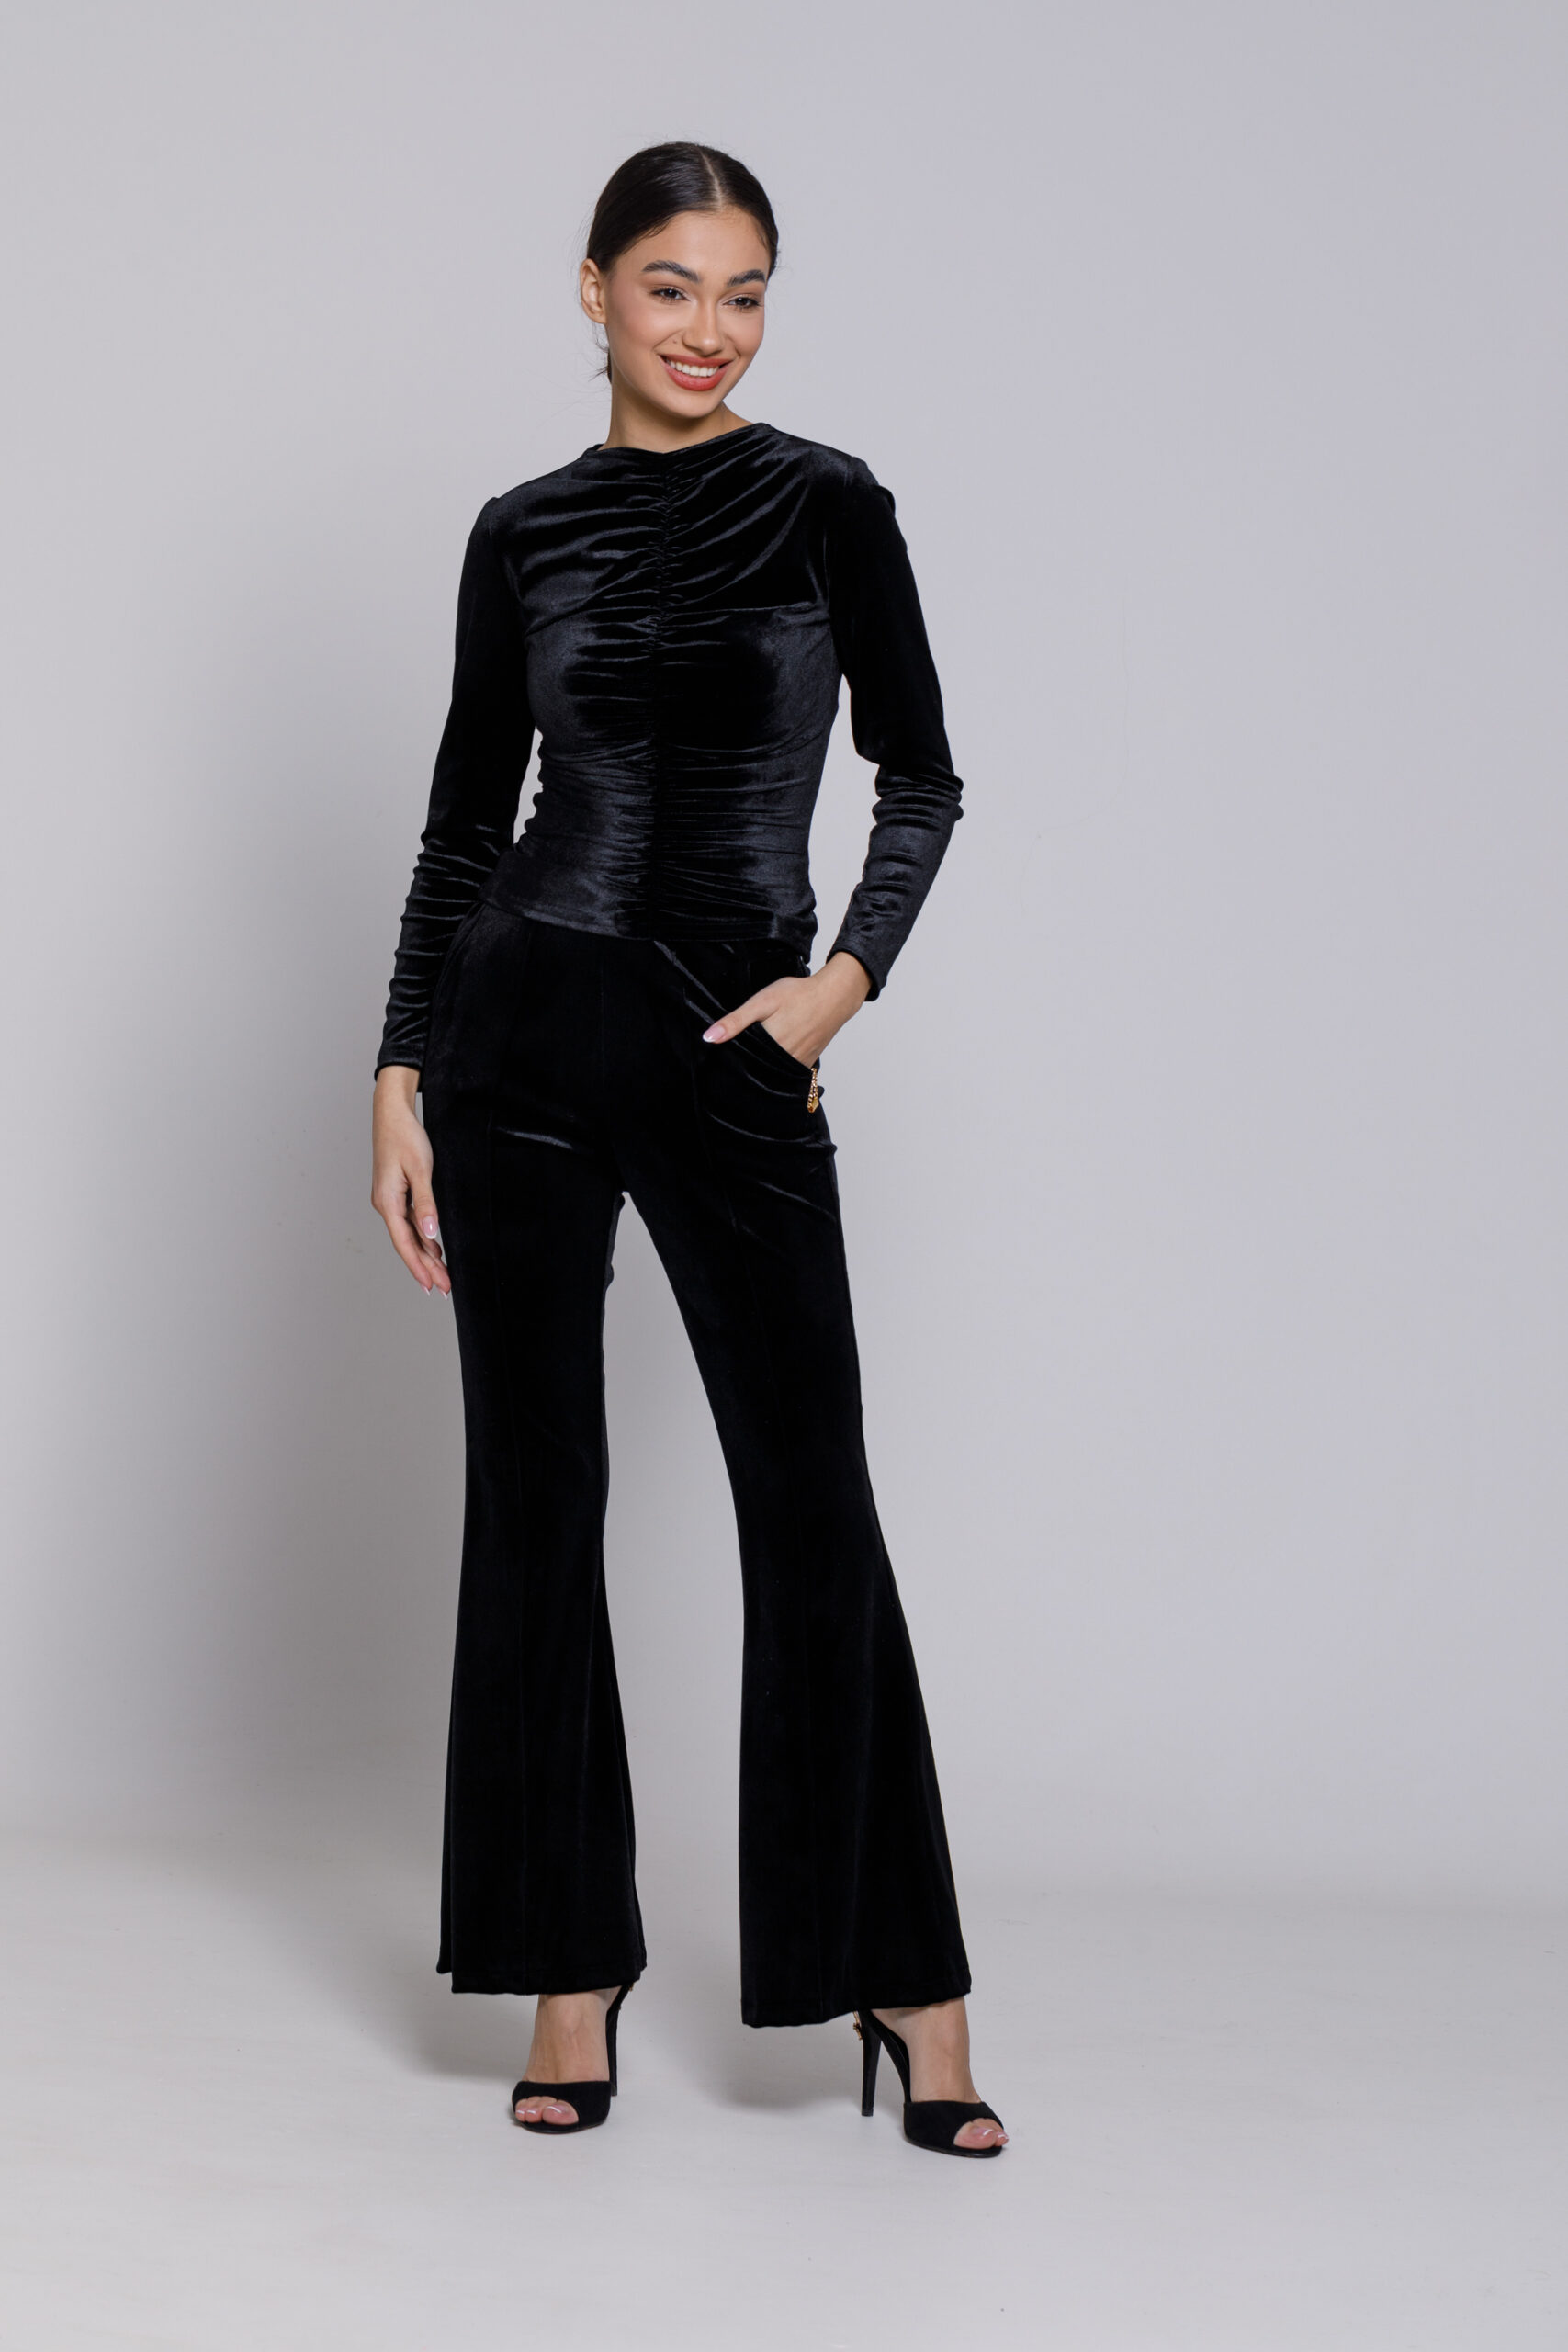 ANNA black velvet blouse. Natural fabrics, original design, handmade embroidery